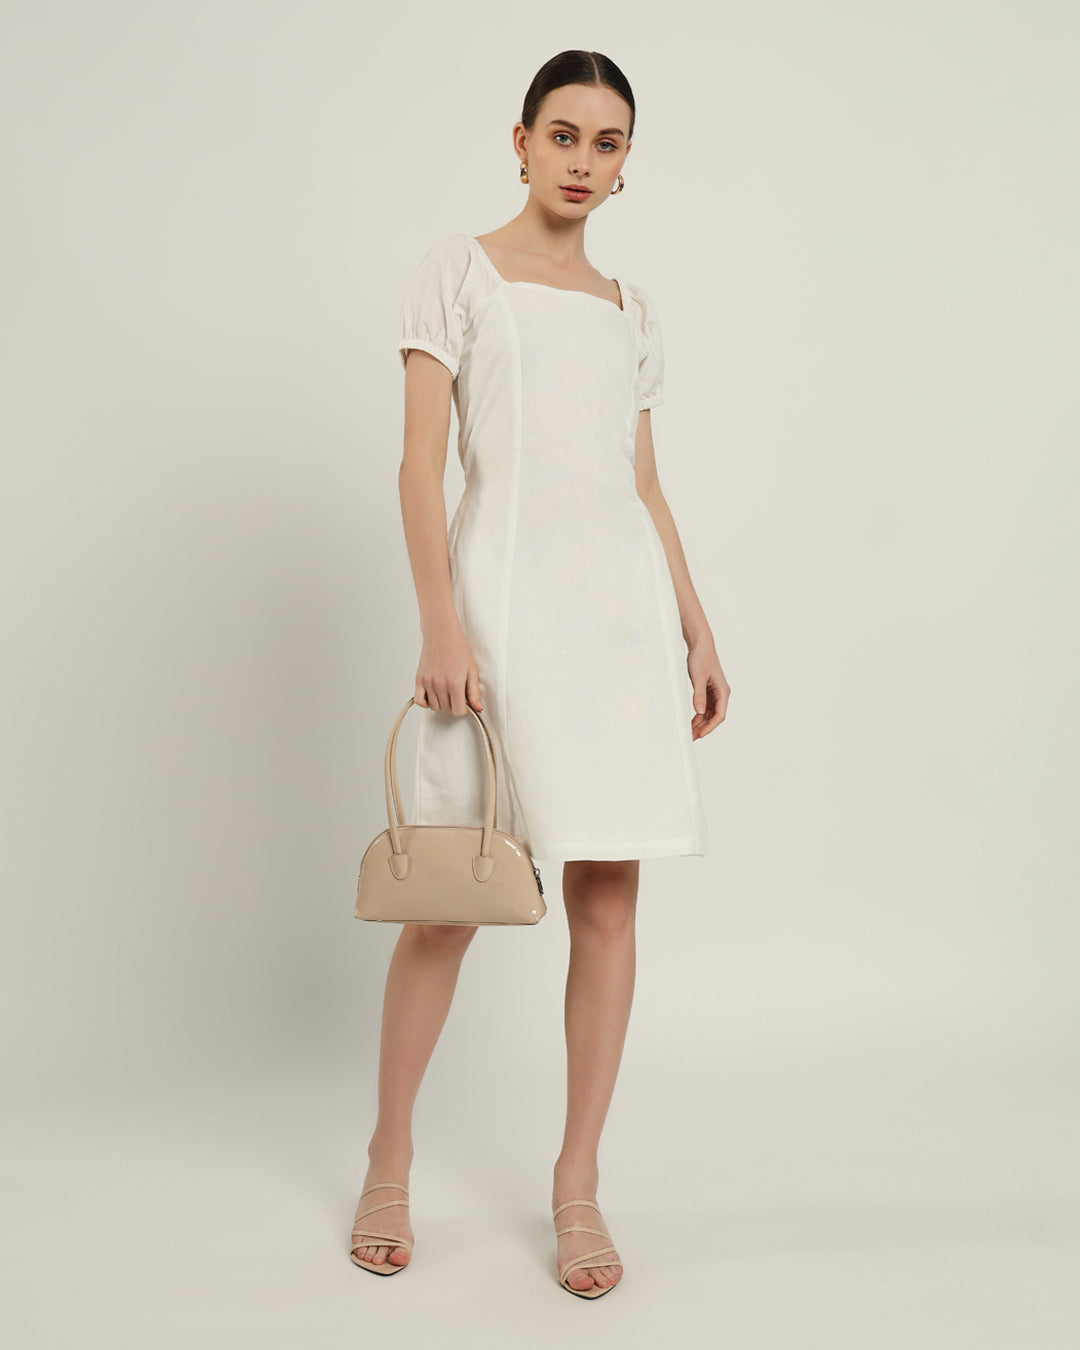 The Arar Daisy White Linen Dress